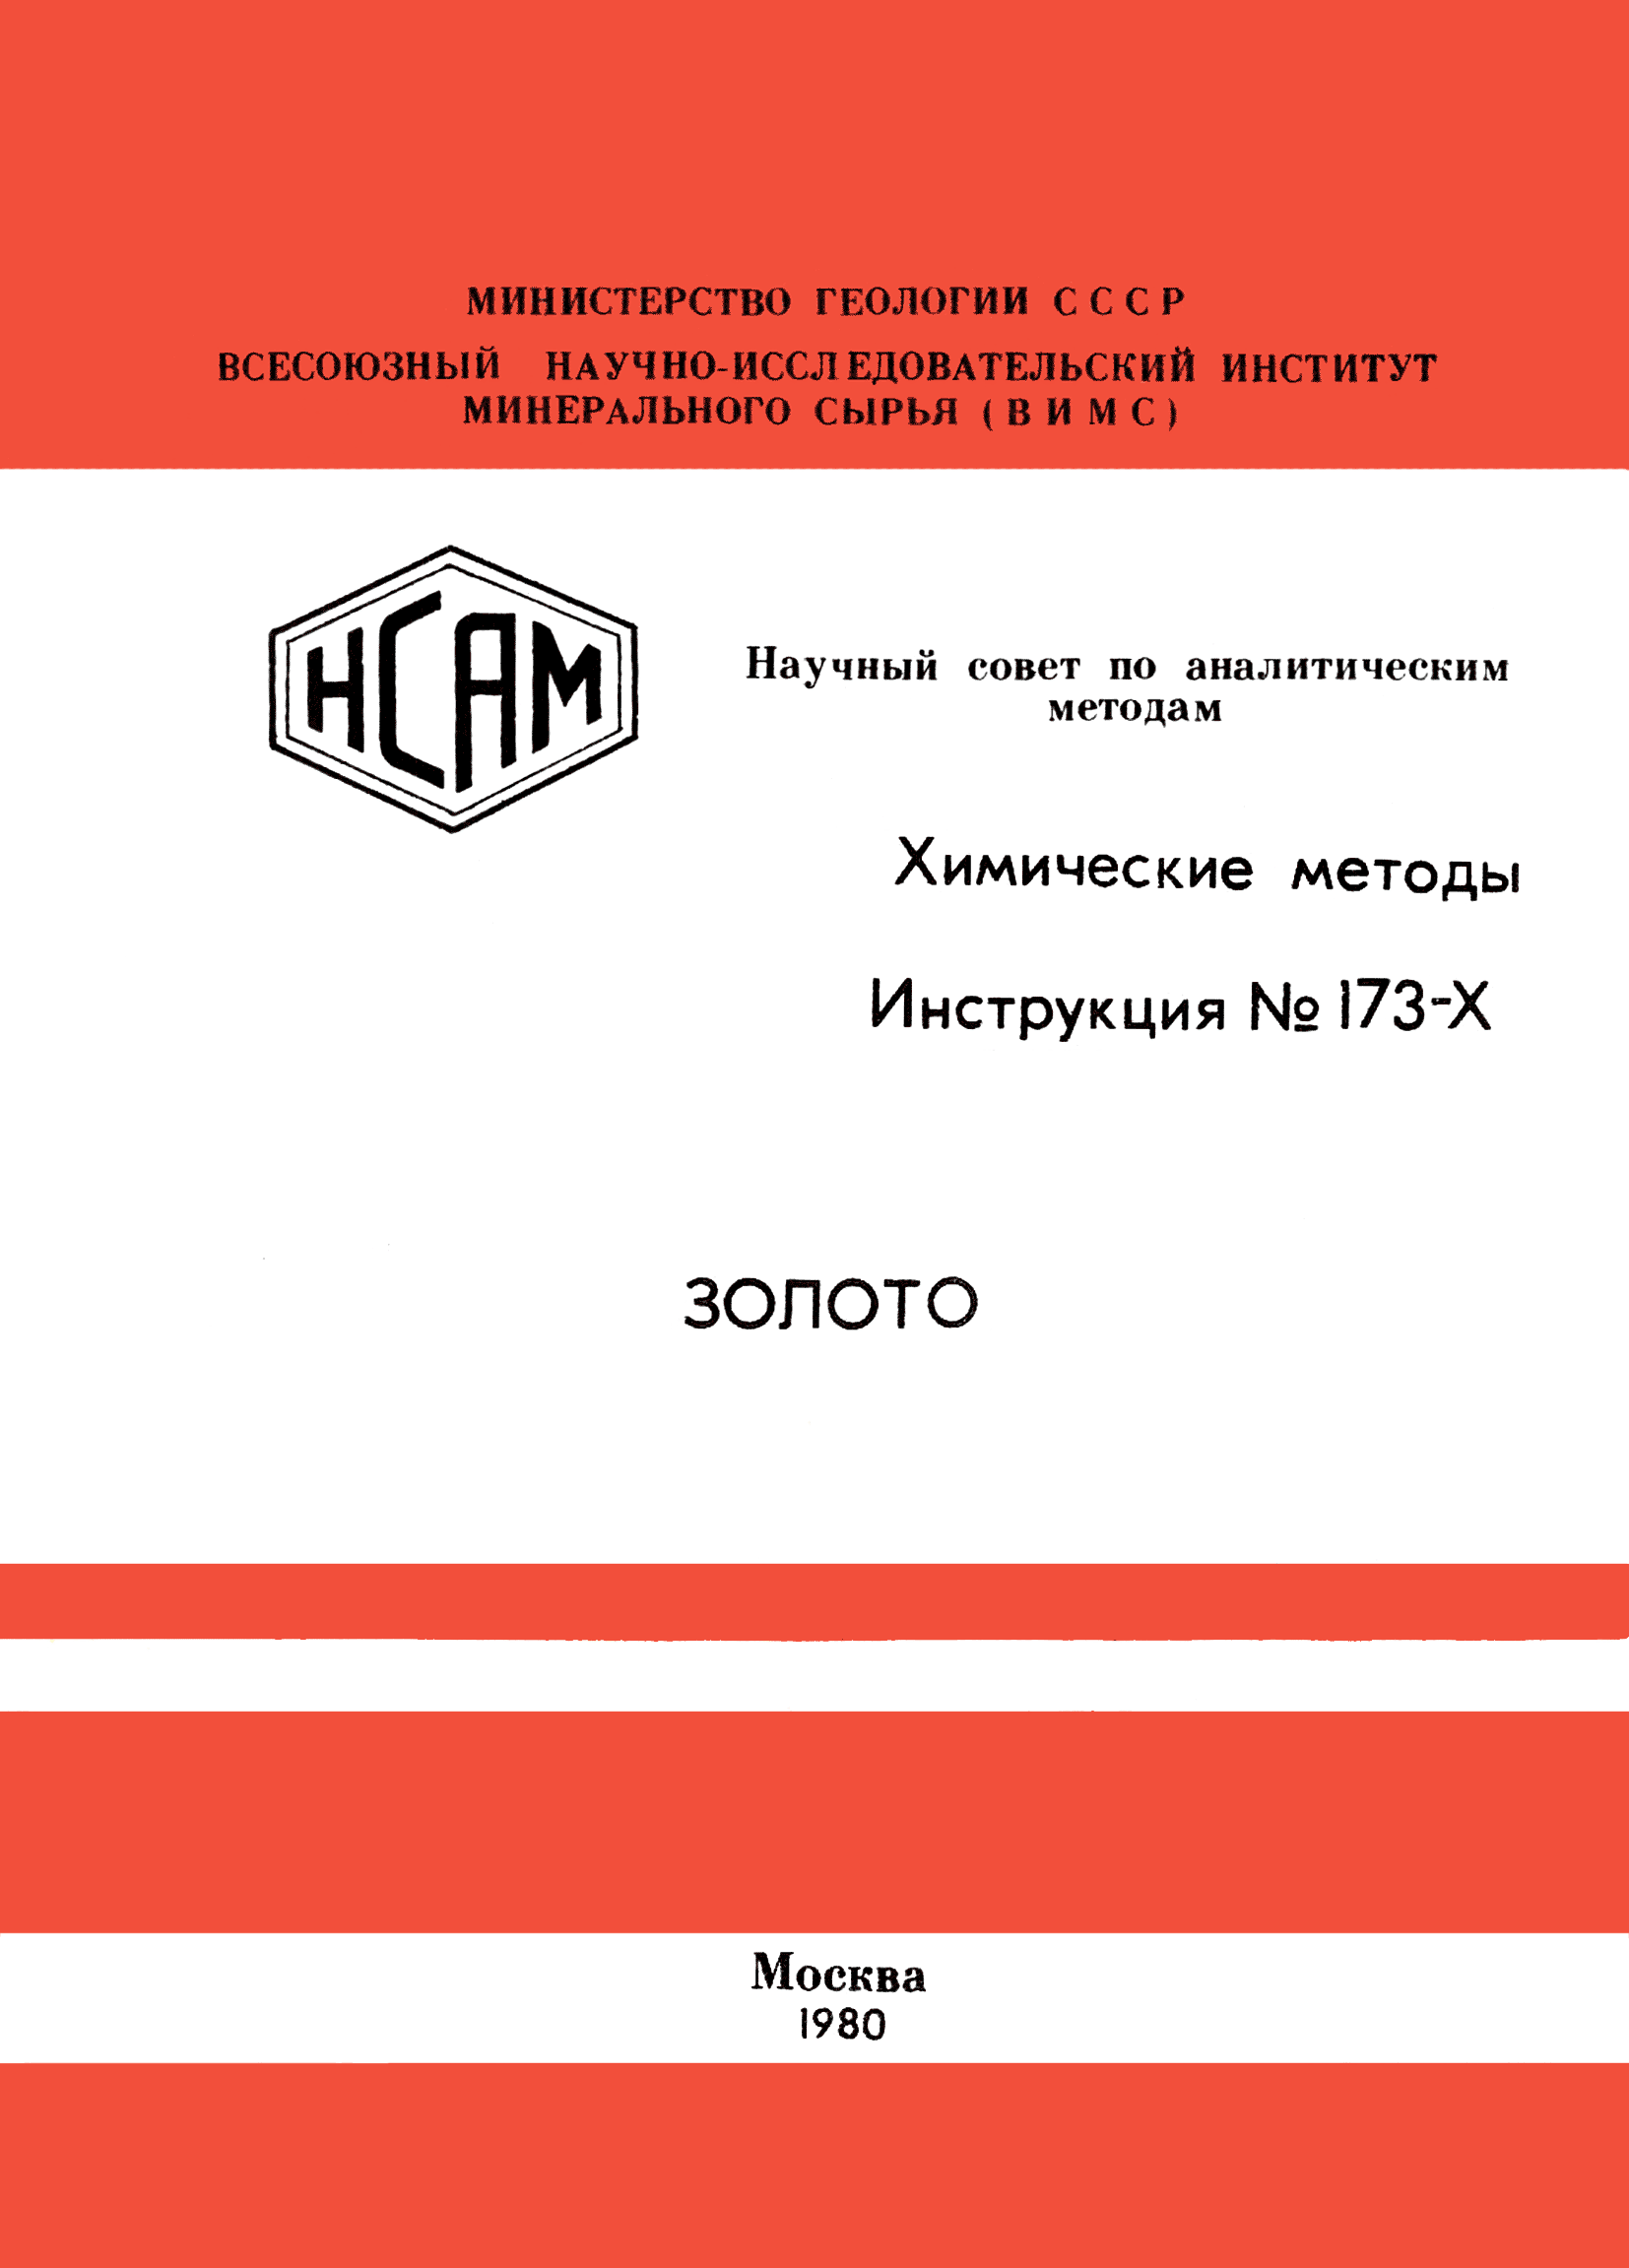 Инструкция НСАМ 173-Х